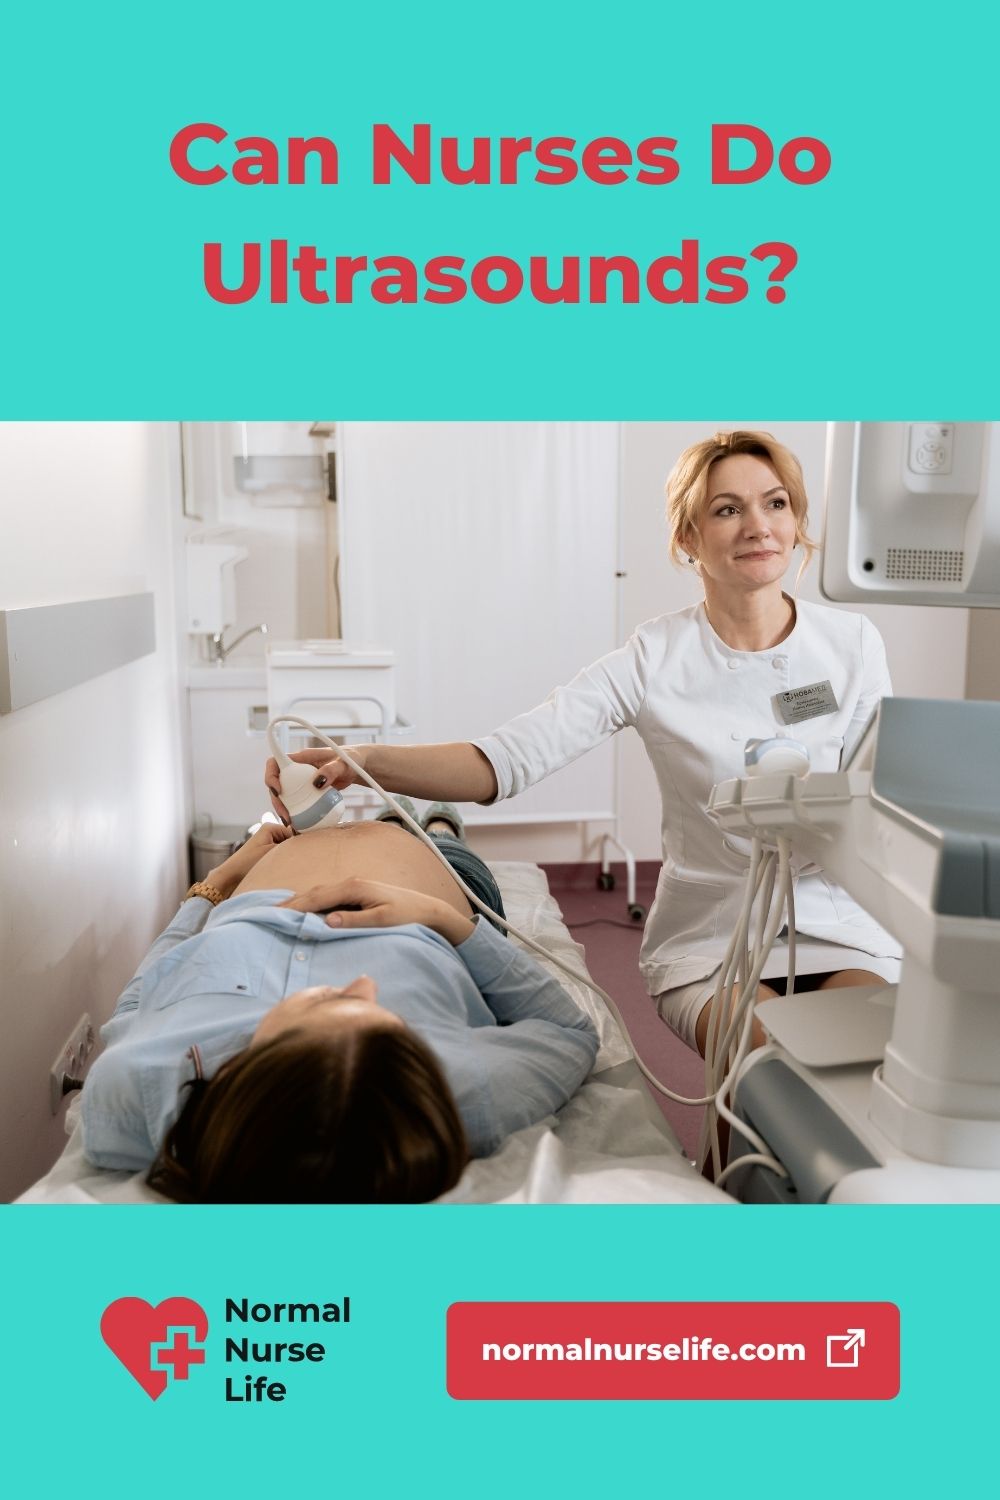 Can nurses do ultrasounds or not